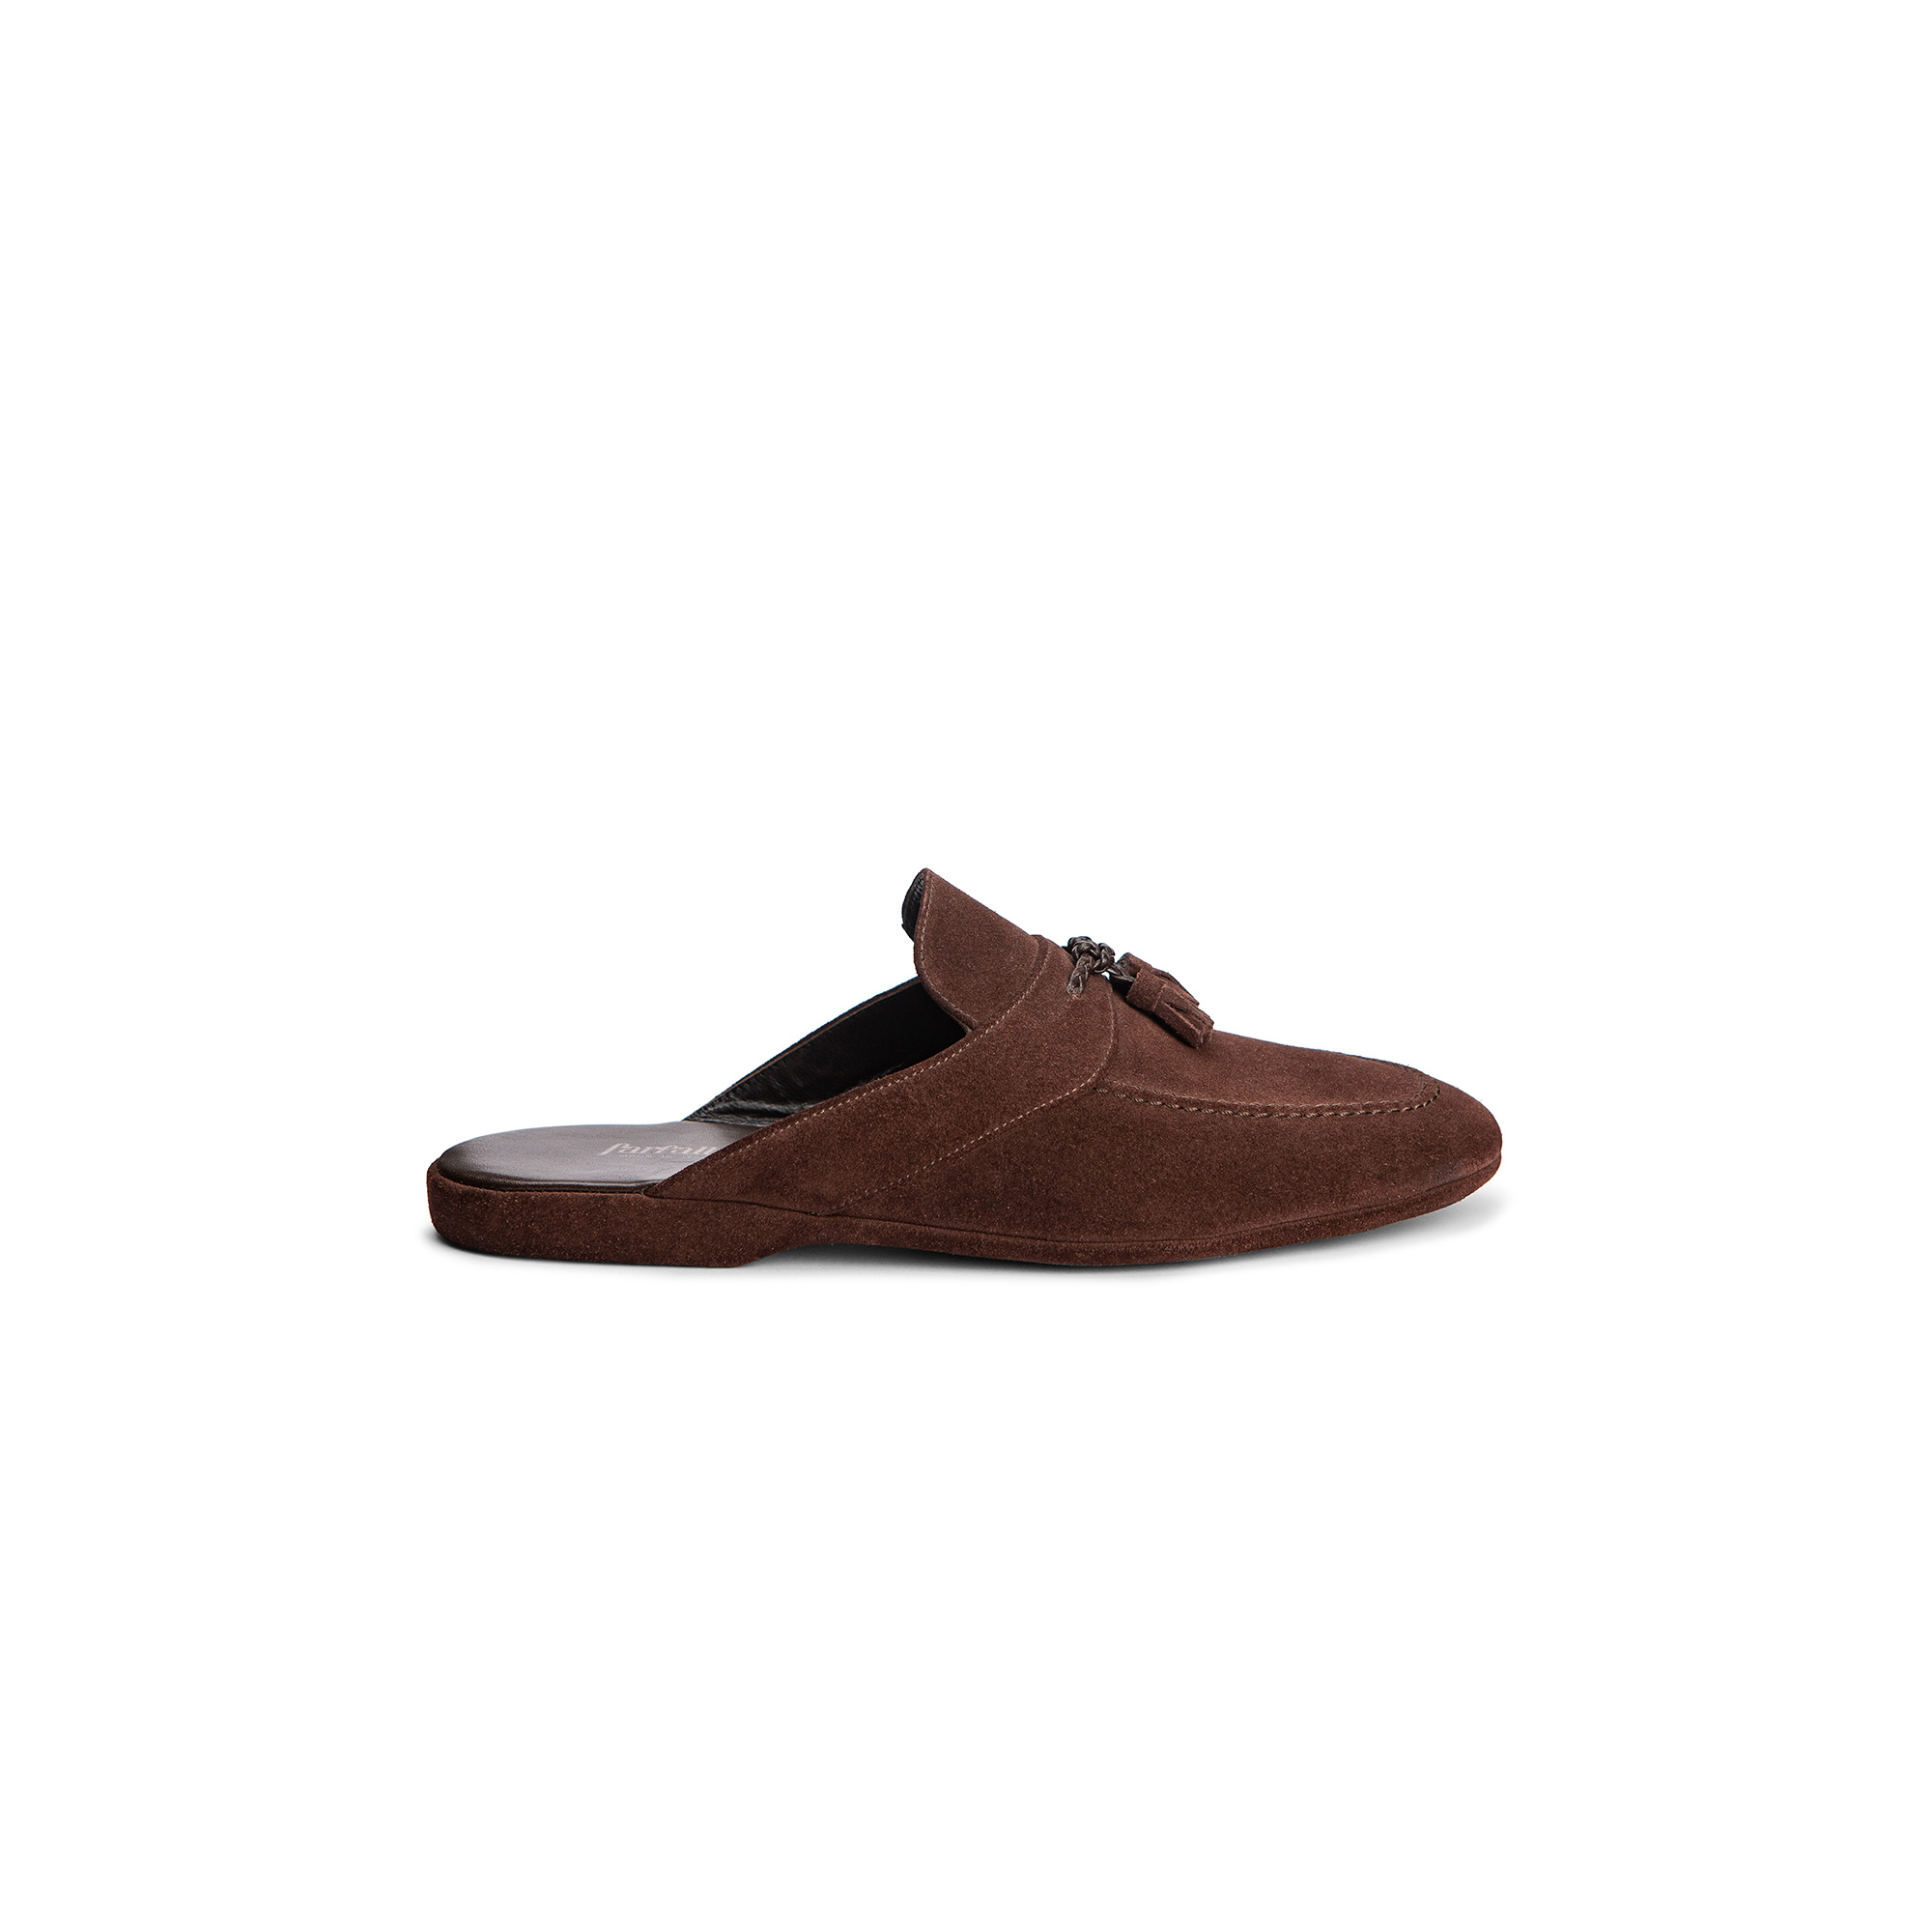 Classic indoor open ebony velour slipper - Farfalla italian slippers